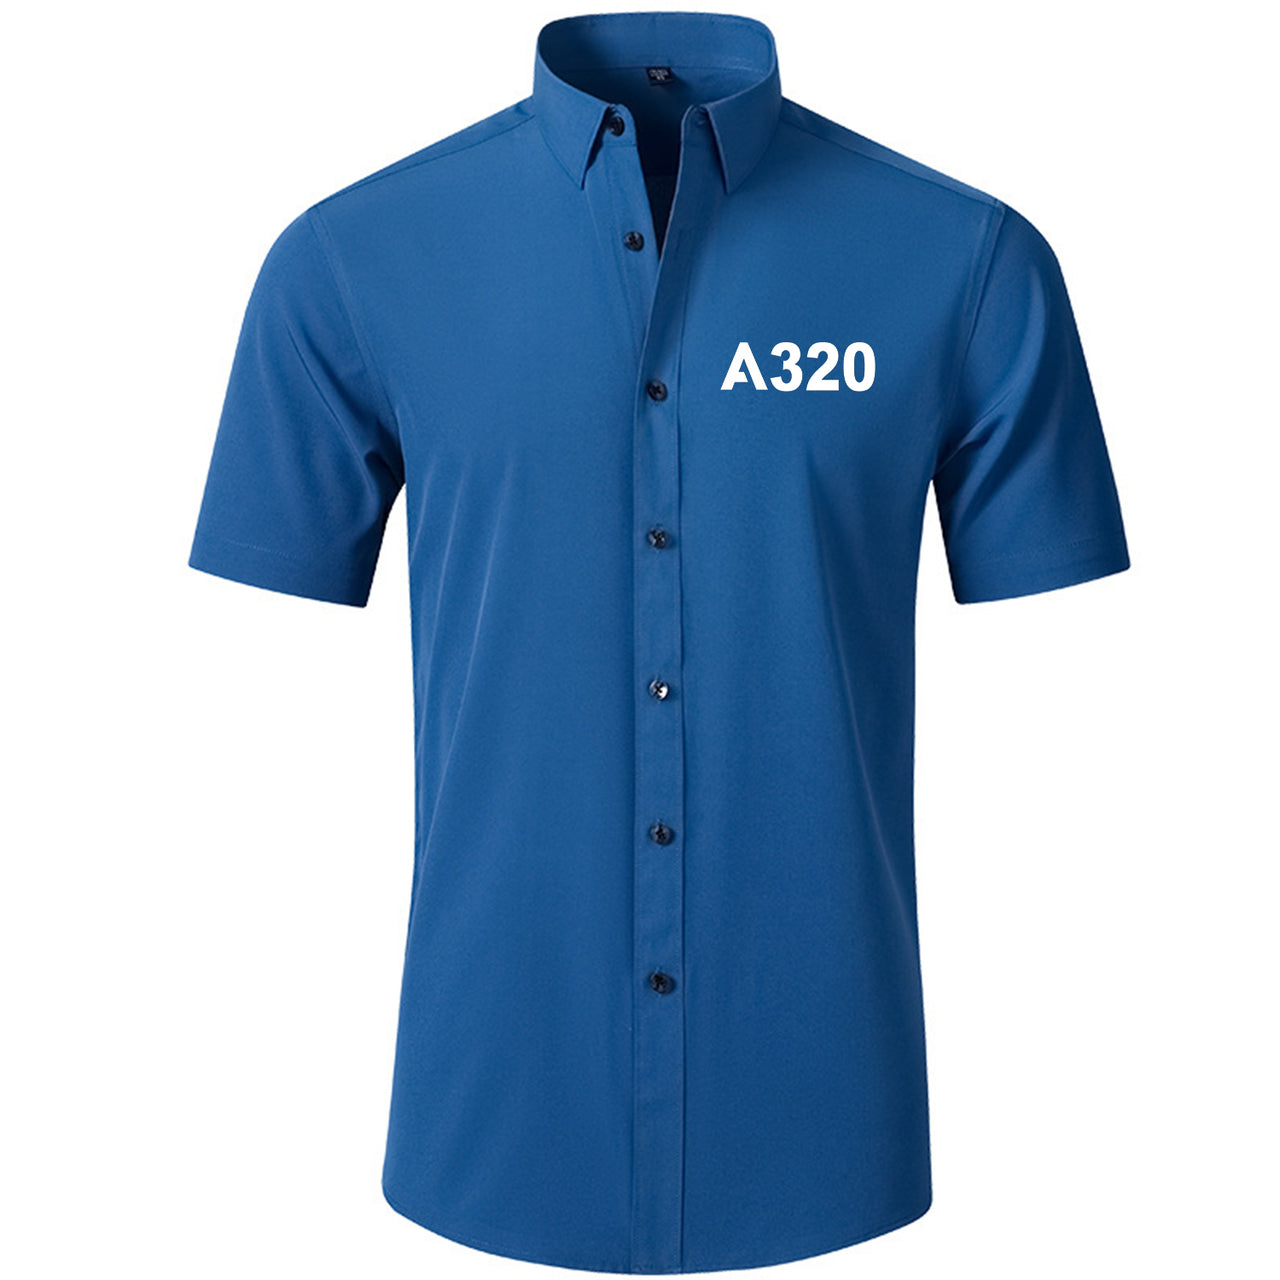 A320 Flat Text Designed Short Sleeve Shirts